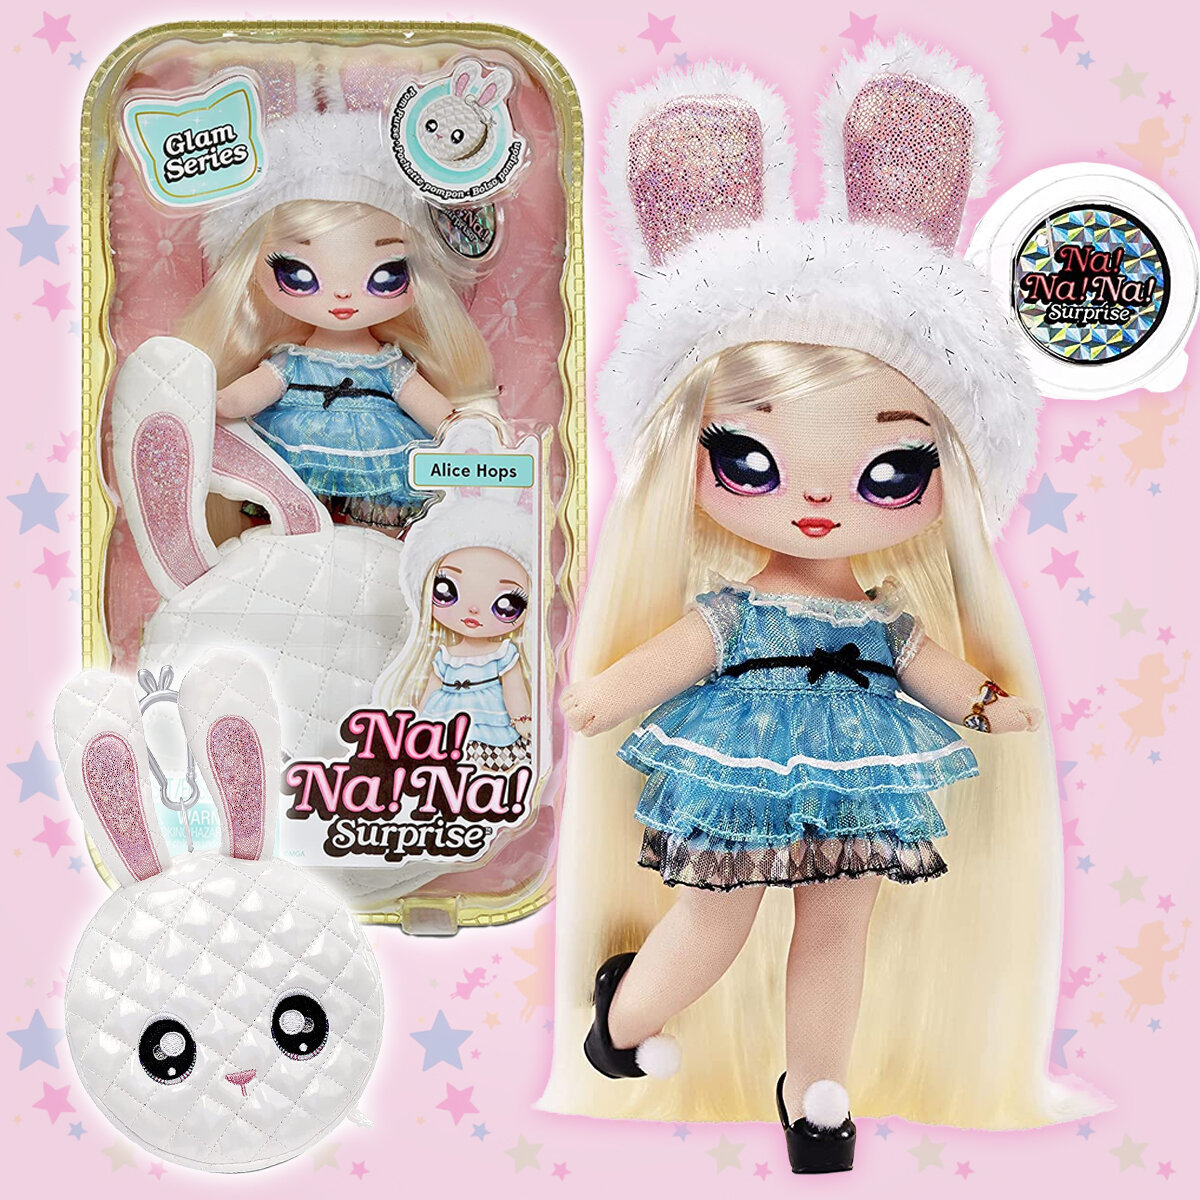 Кукла Na! Na! Na! Surprise 2 в 1 серия Glam Series Alice Hops белый кролик 20 см